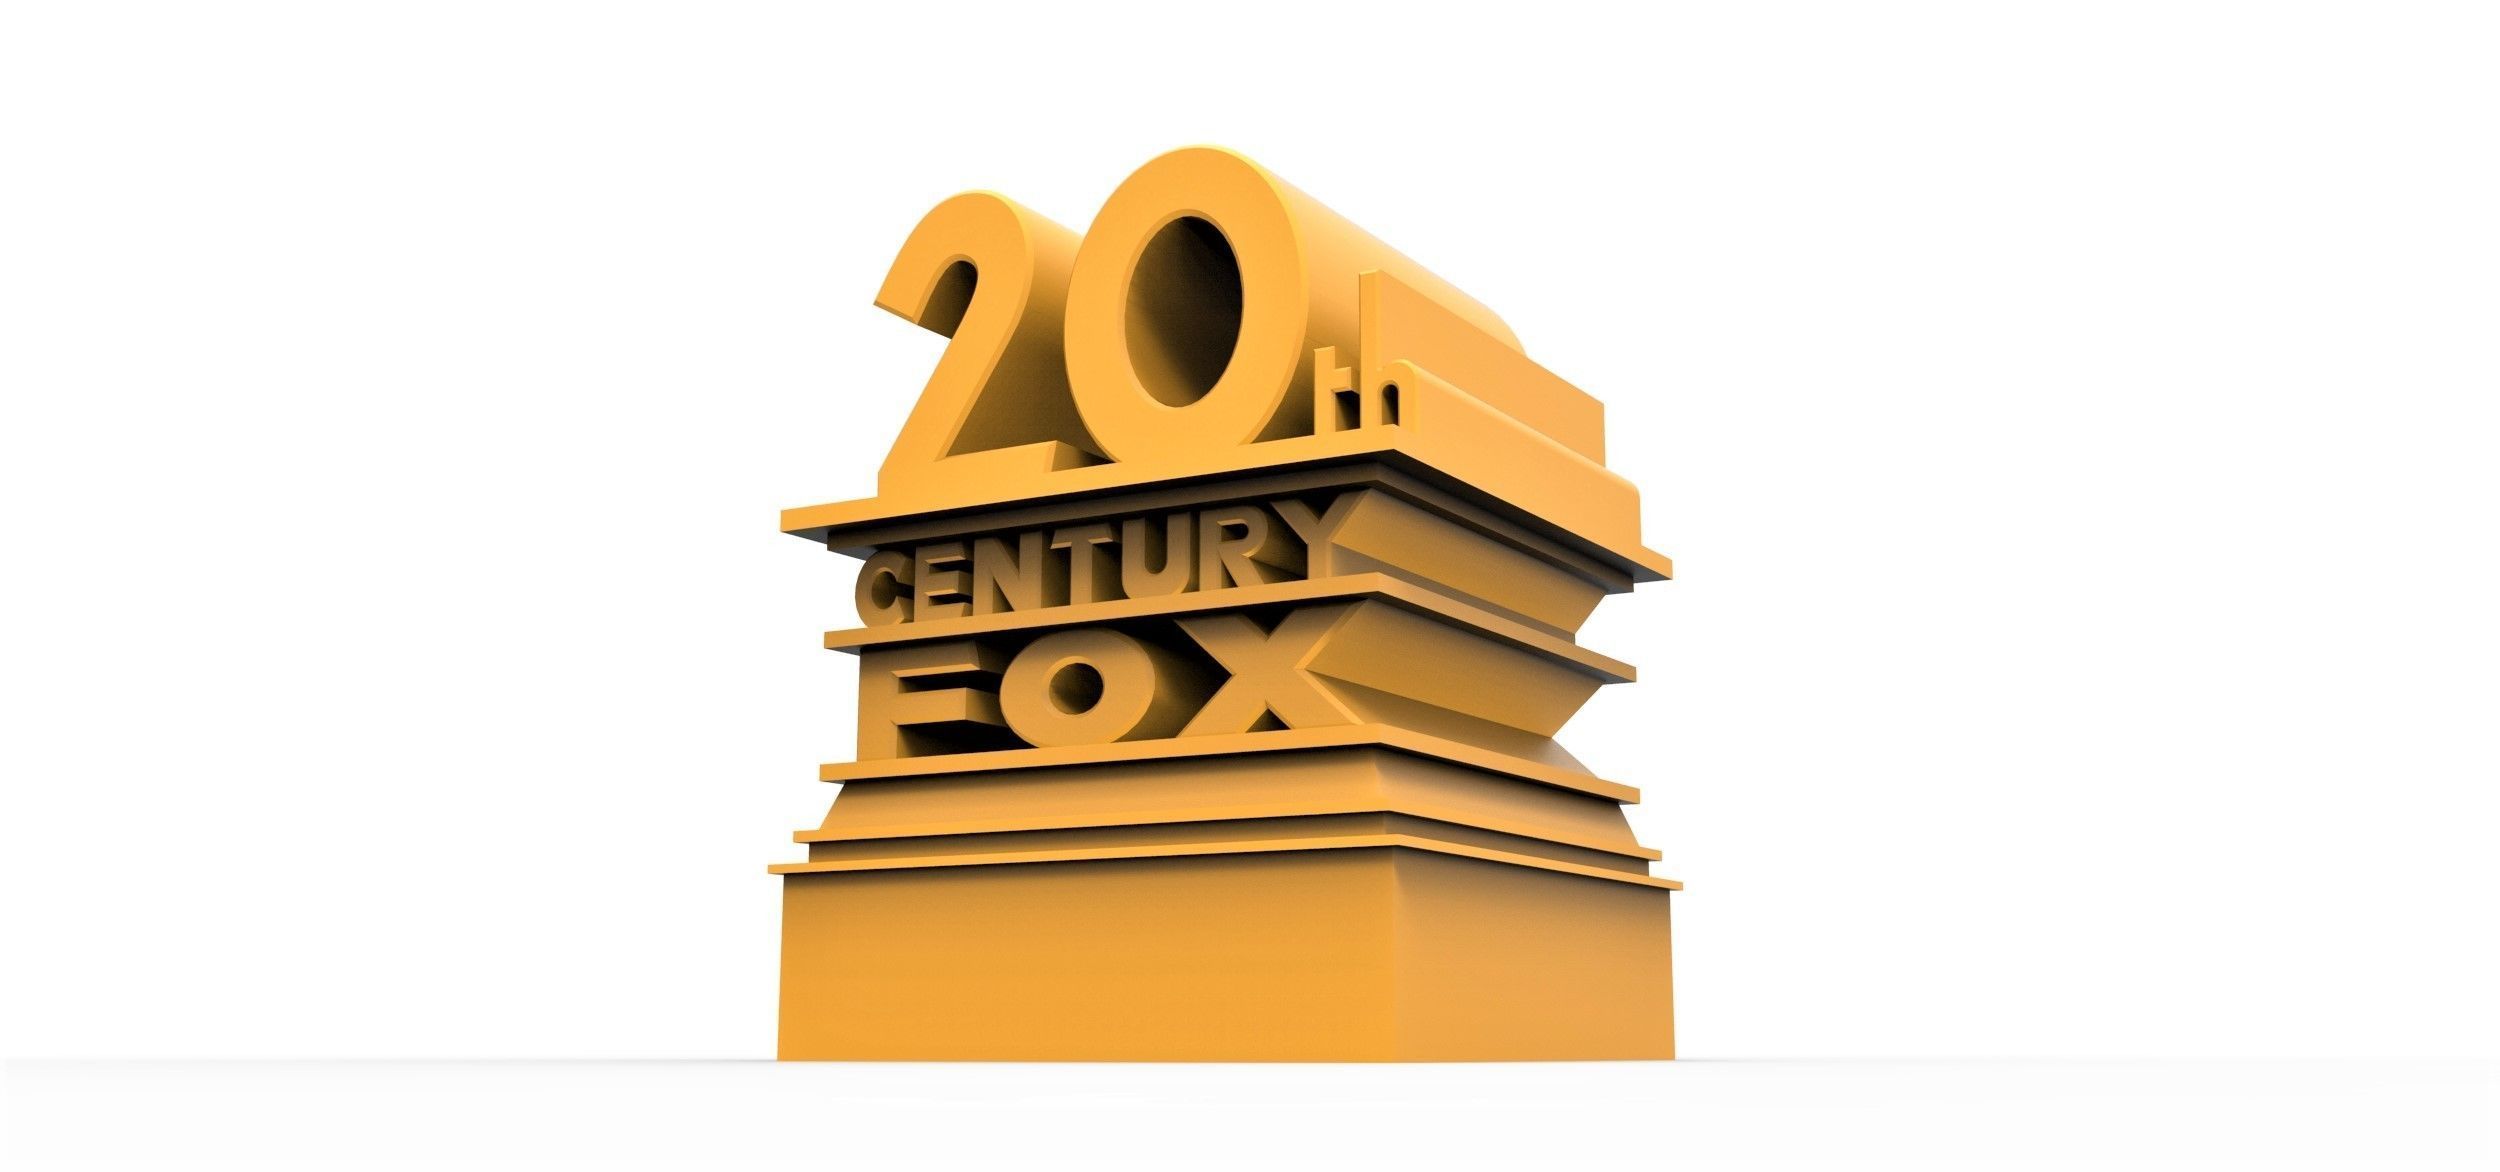 20th fox 3d. 20 Век Центури Фокс. 20 Century Fox logo. 20th Century Fox dre4mw4lker. 20 Век Фокс 3д модель.